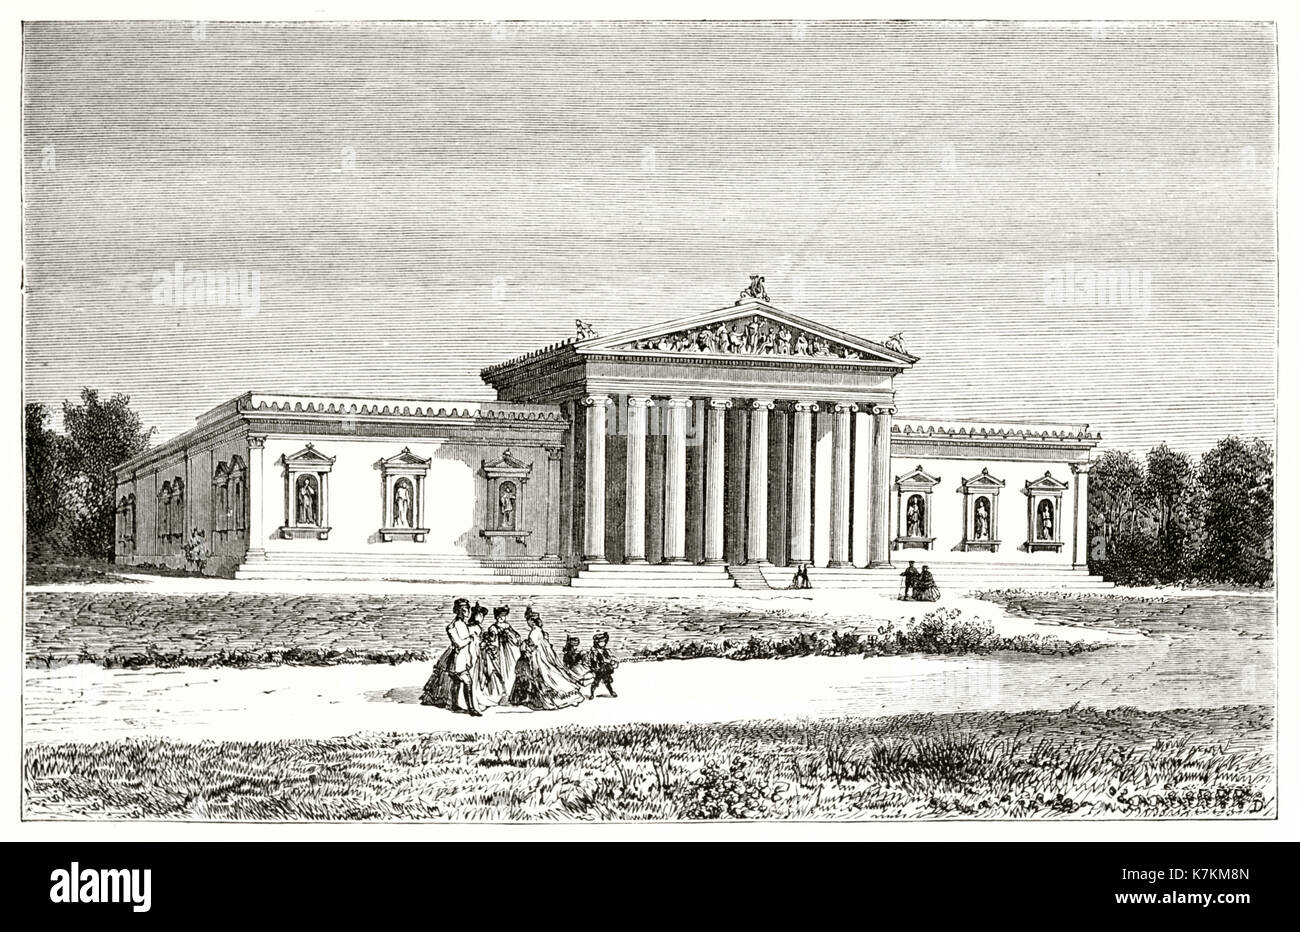 Vecchio vista la Glyptothek di Monaco di Baviera, Germania. Dal Lancelot e Duperyon, publ. in Le Tour du Monde, Parigi, 1862 Foto Stock